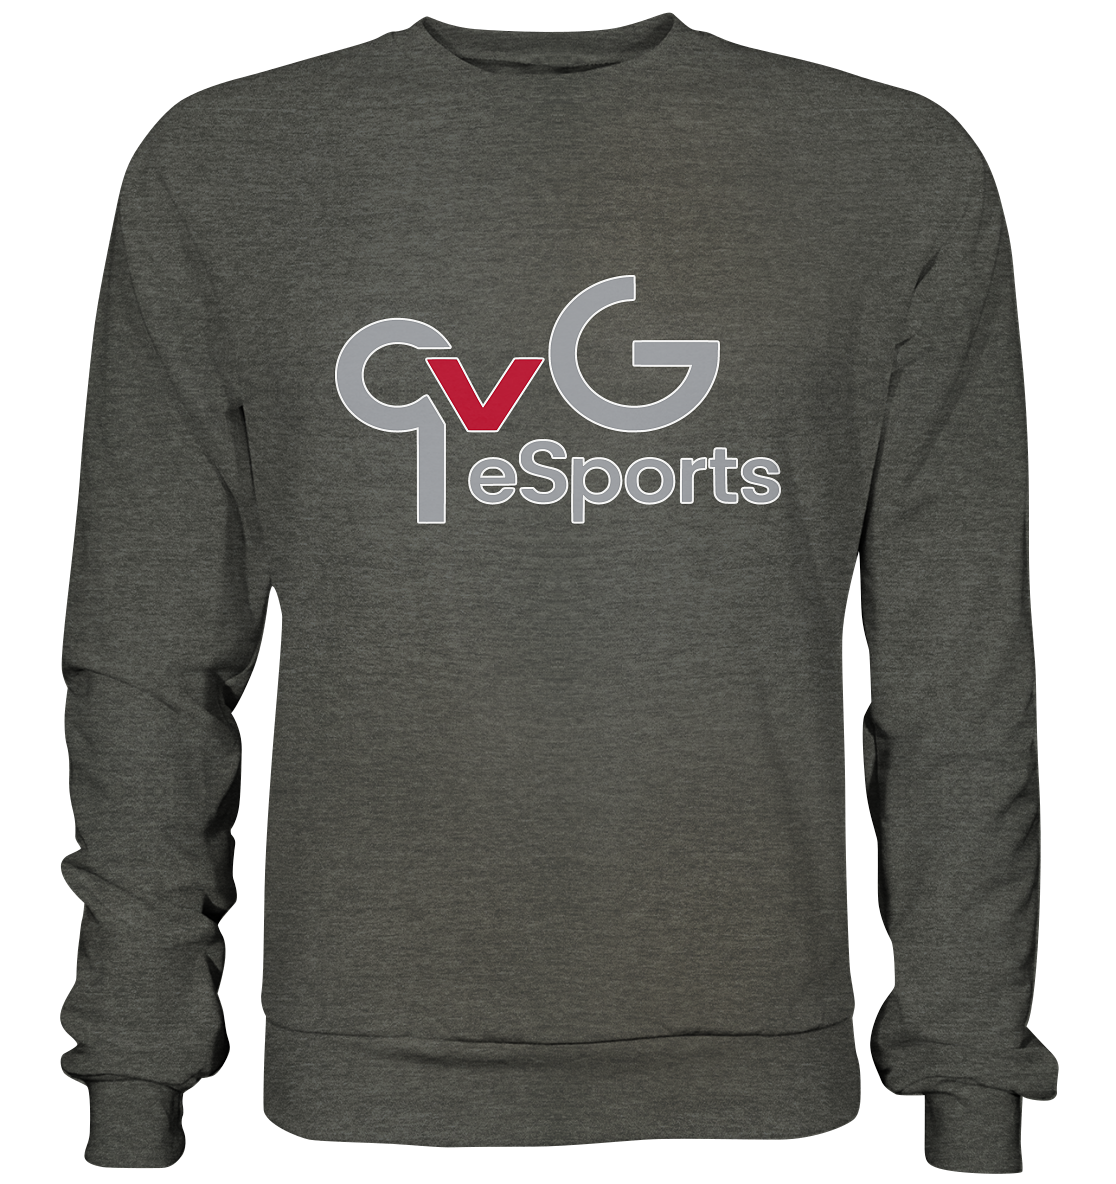 QVG ESPORTS - Basic Sweatshirt